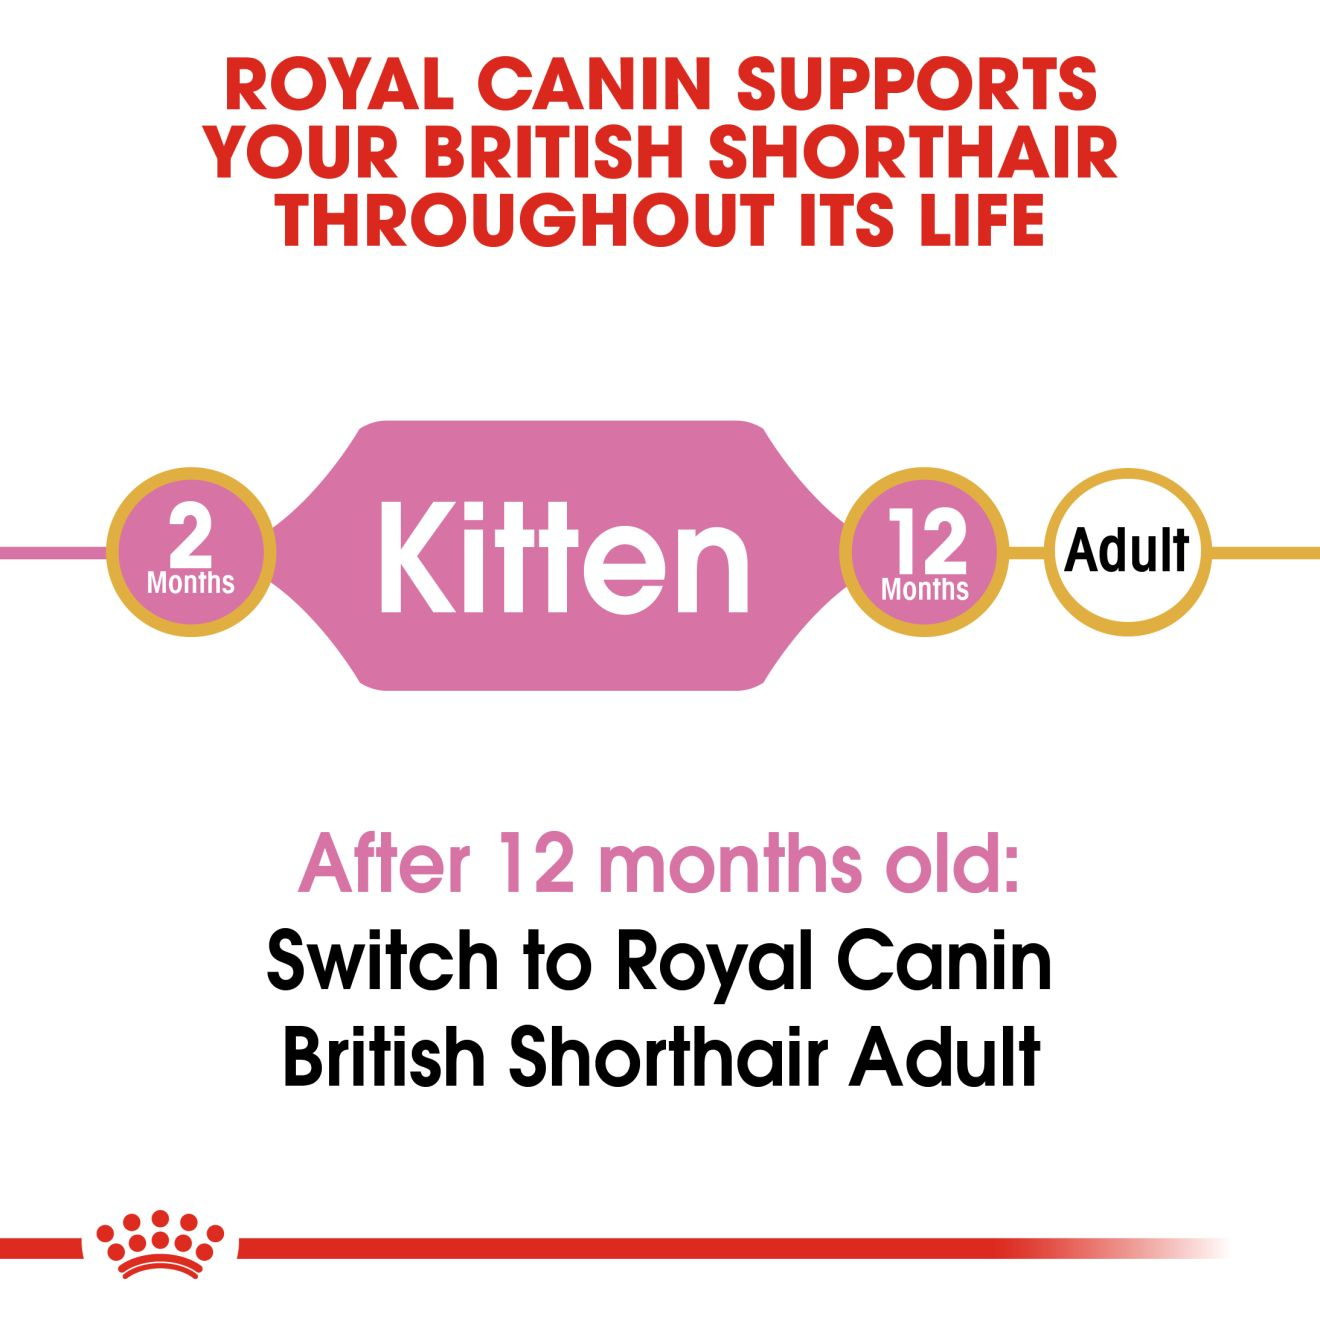 royal canin british shorthair kitten food